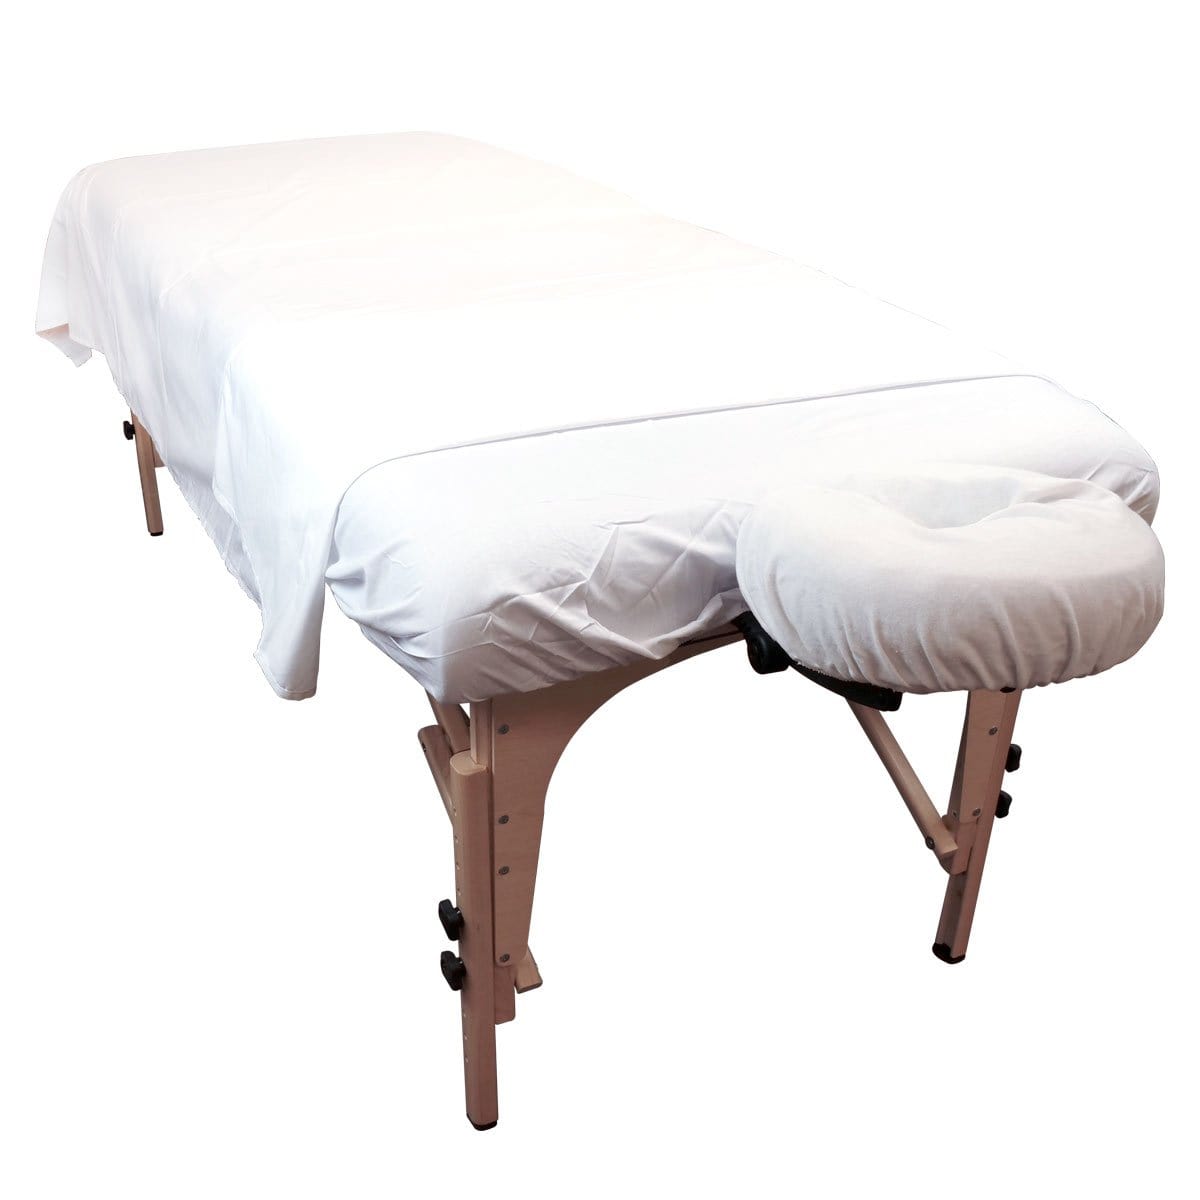 Massage Table Sheets